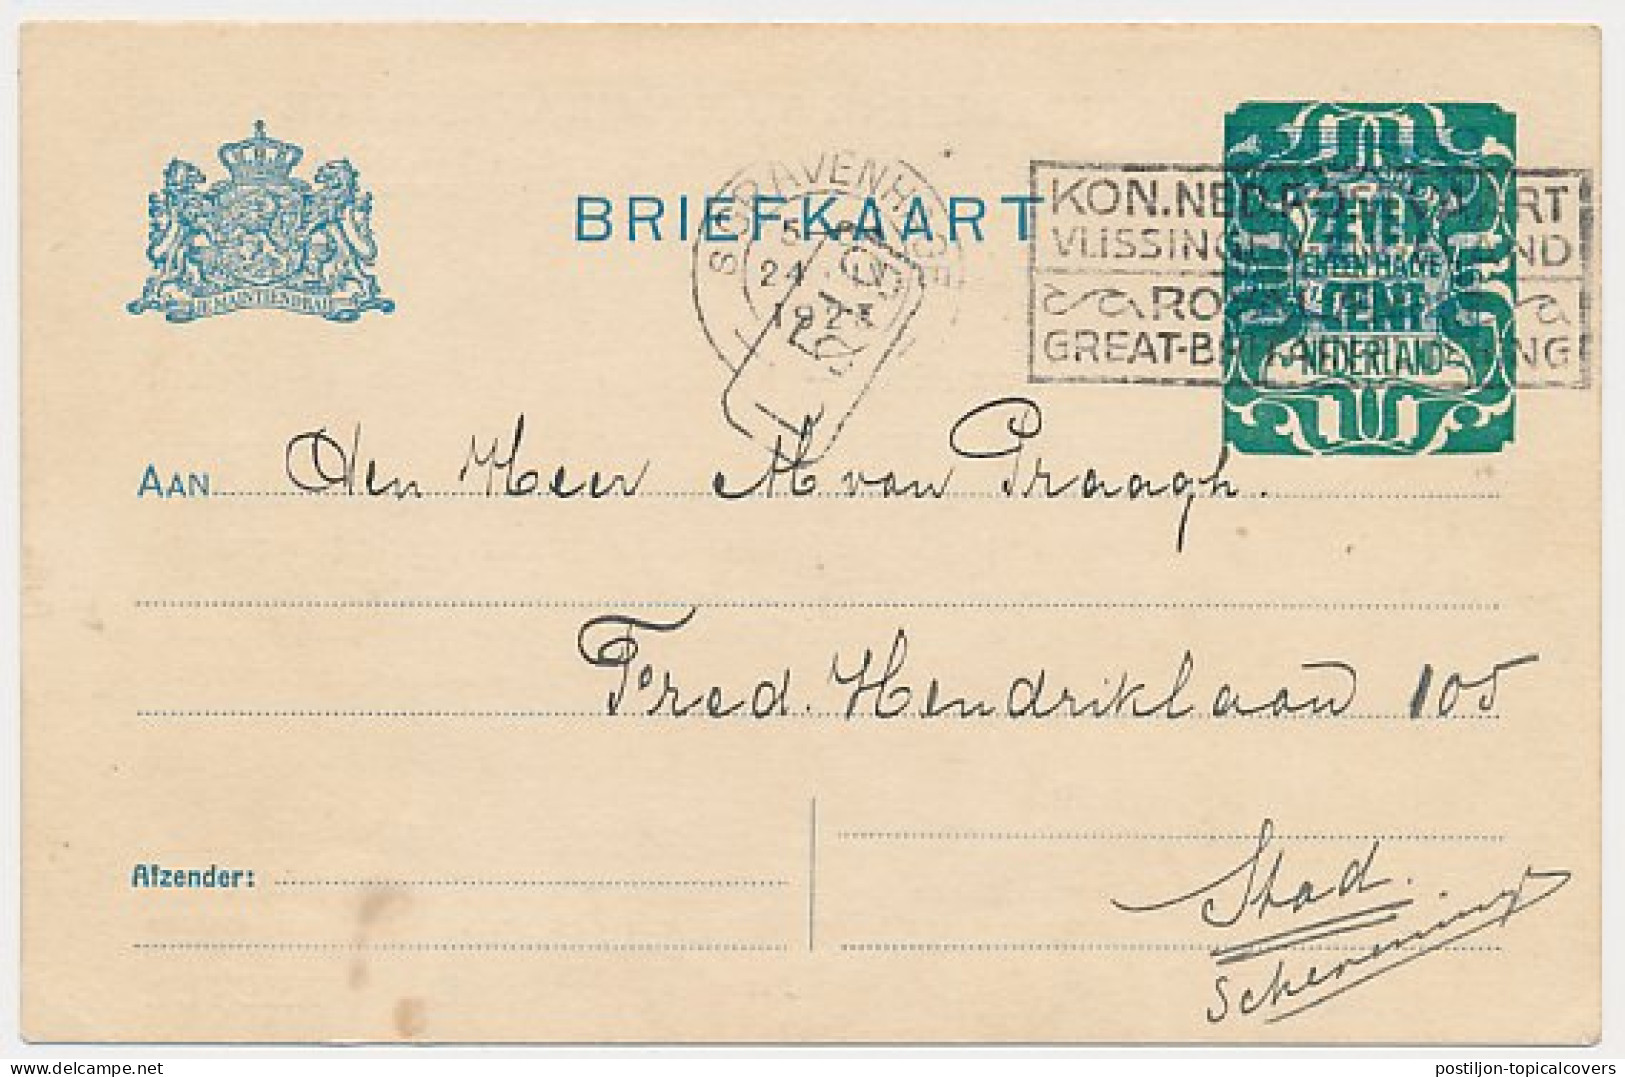 Briefkaart G. DW163-II-b - Duinwaterleiding S-Gravenhage 1923 - Ganzsachen